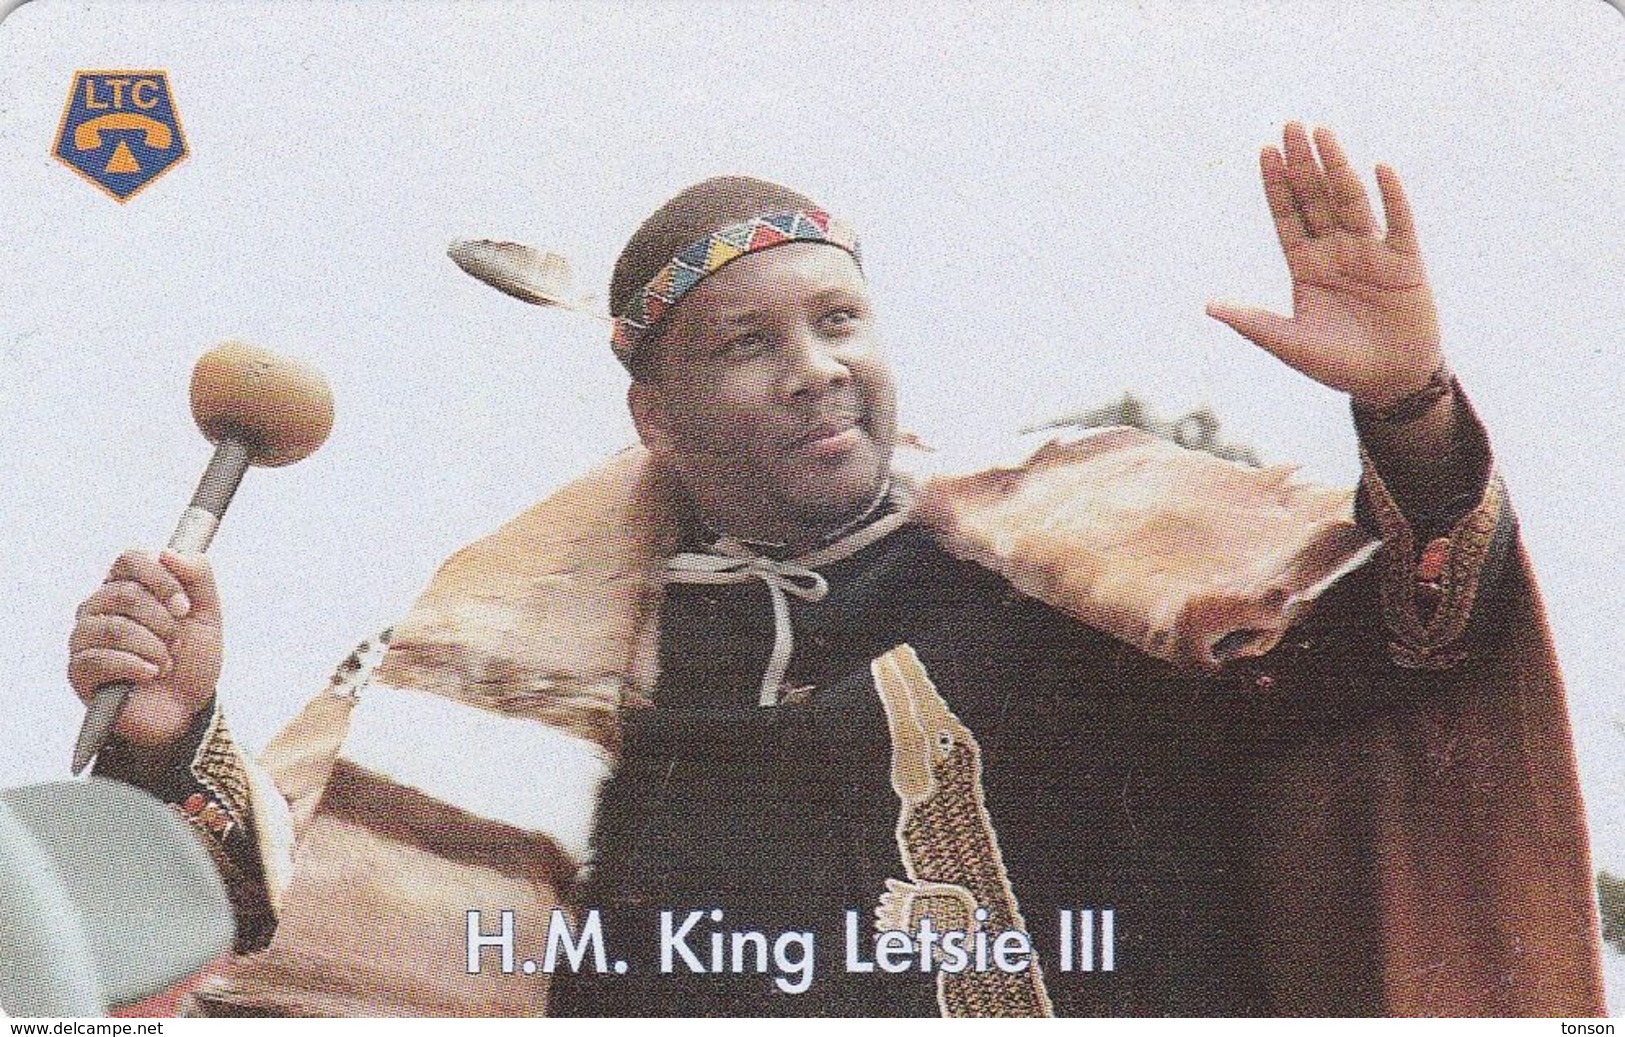 Lesotho, LS-LST-0004, King Letsie III, 2 Scans. - Lesotho